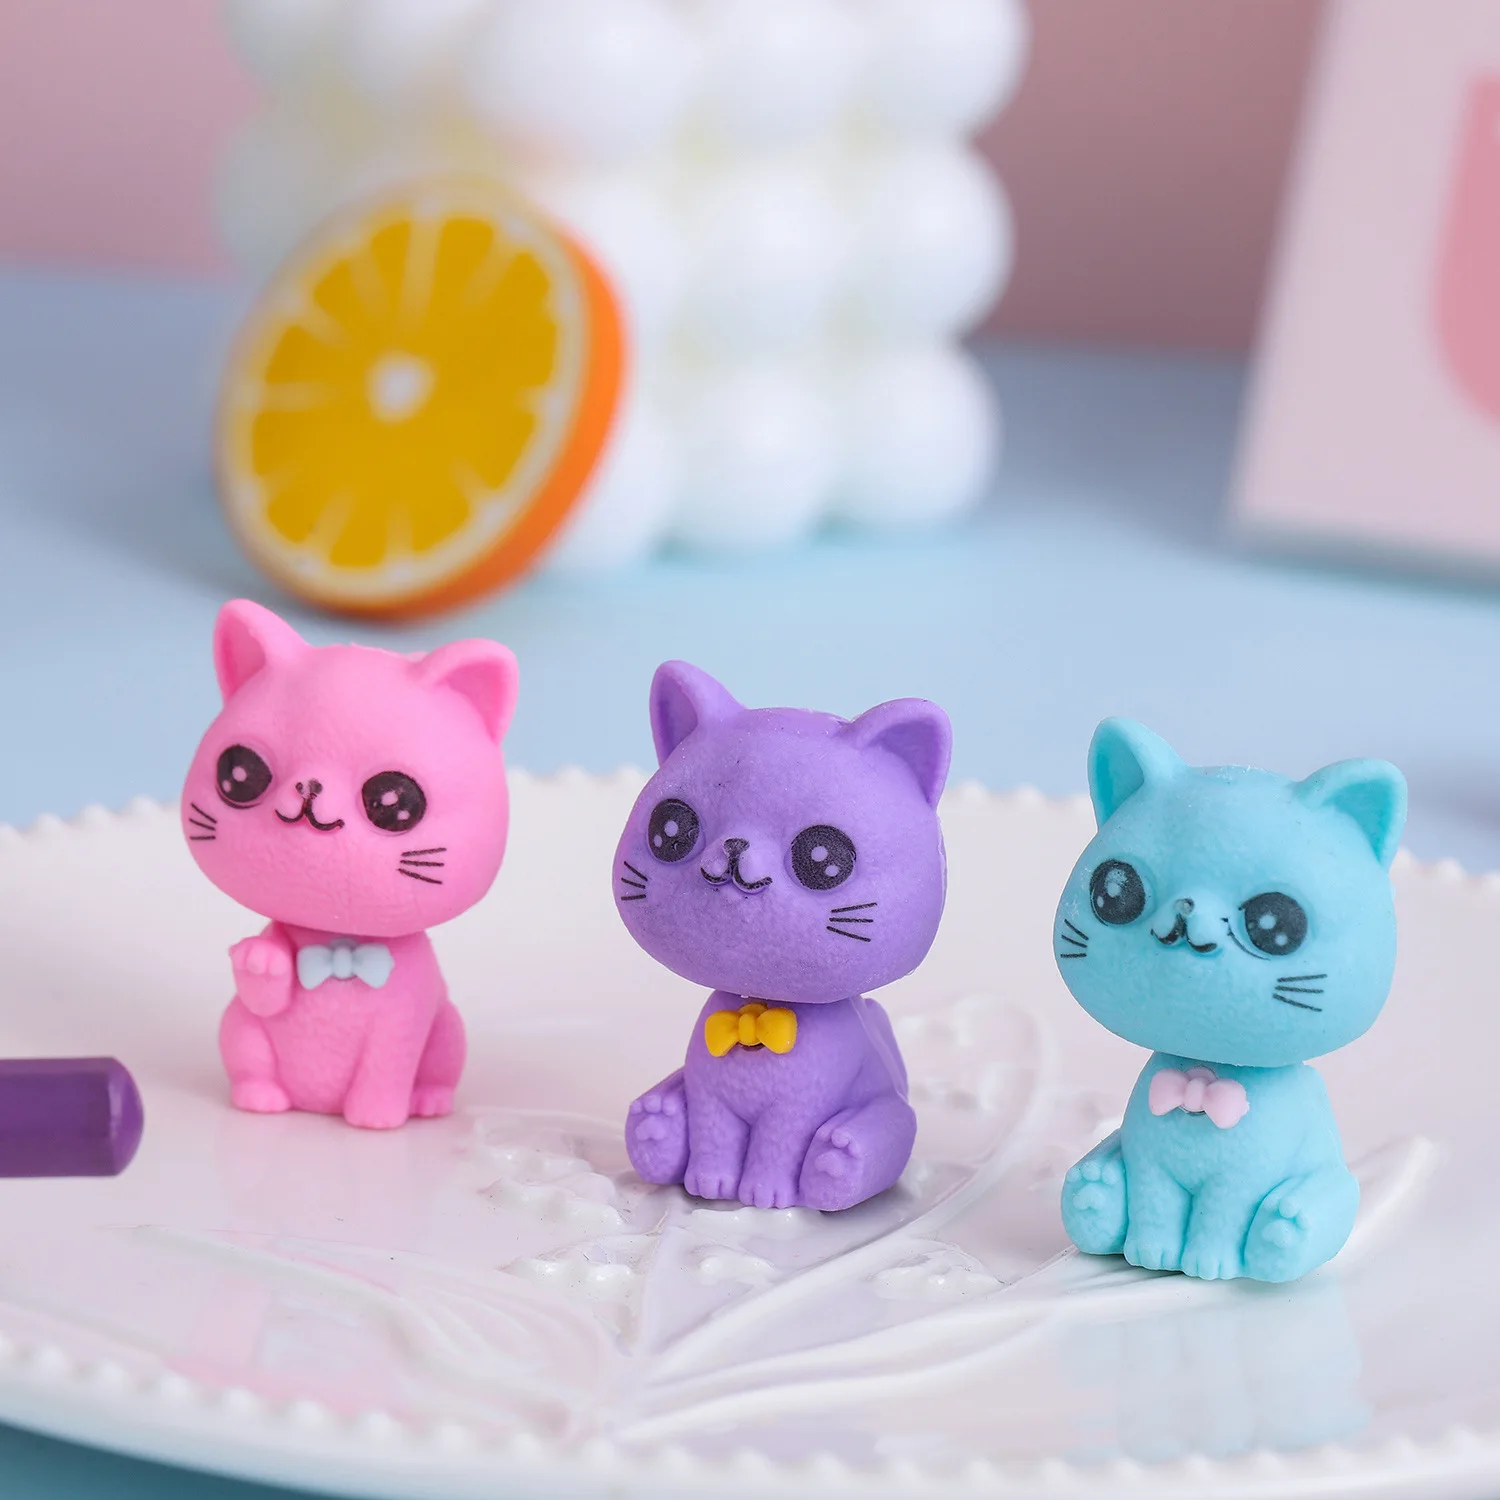 3 Piece Cartoon Cute Cat Rubber Eraser Novelty Stationery